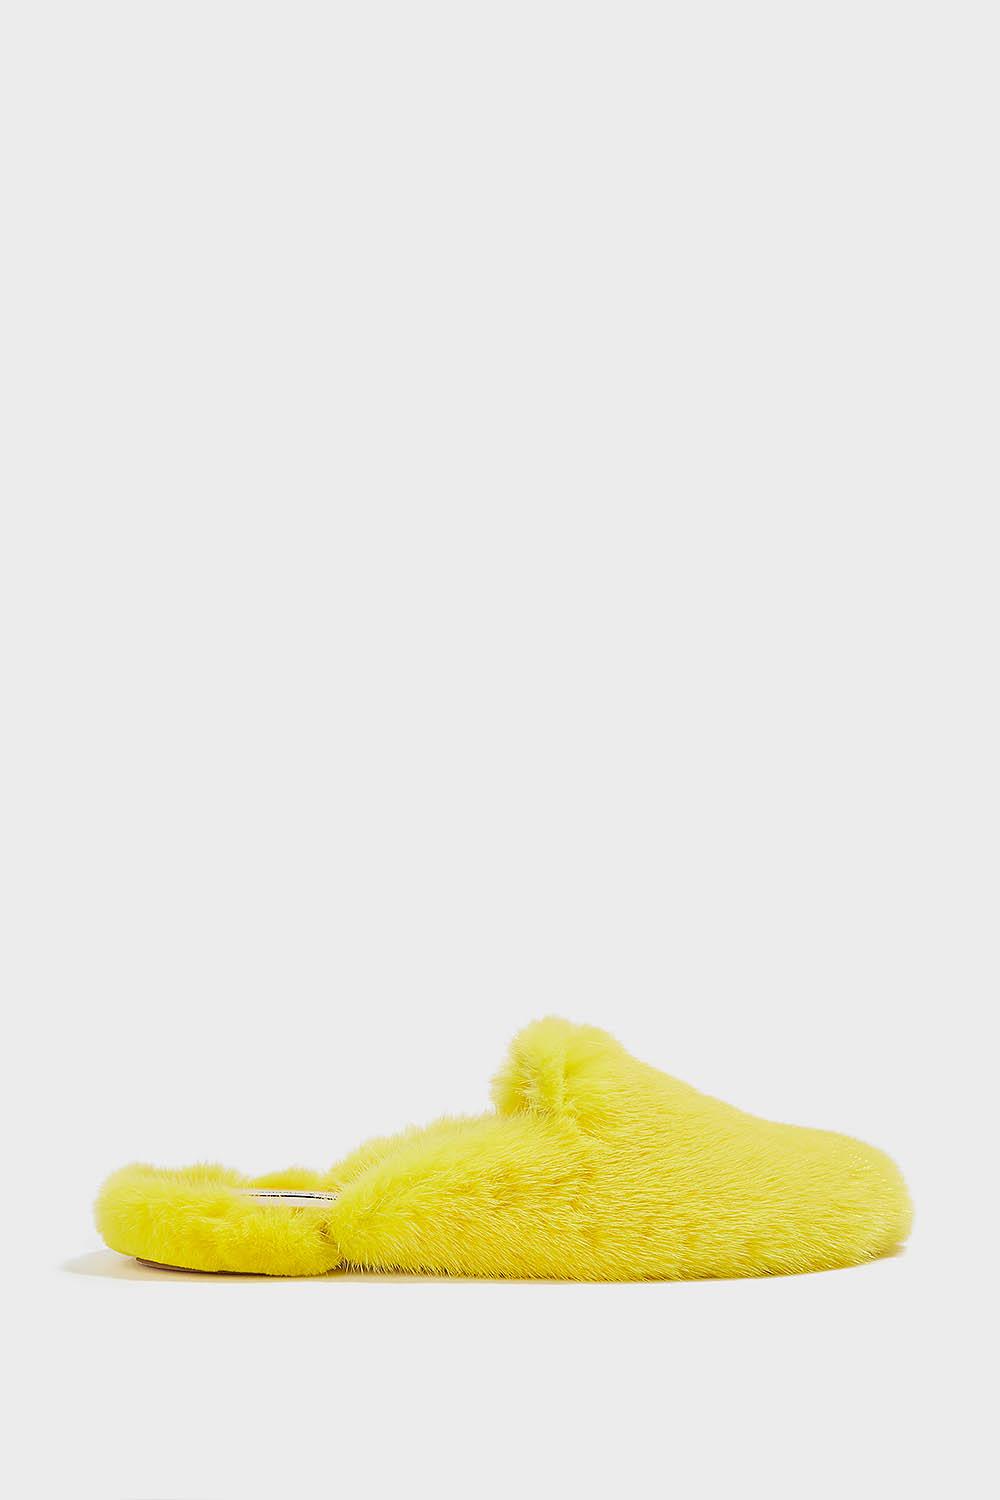 Natasha Zinko Mink Fur Slippers in Yellow - Lyst